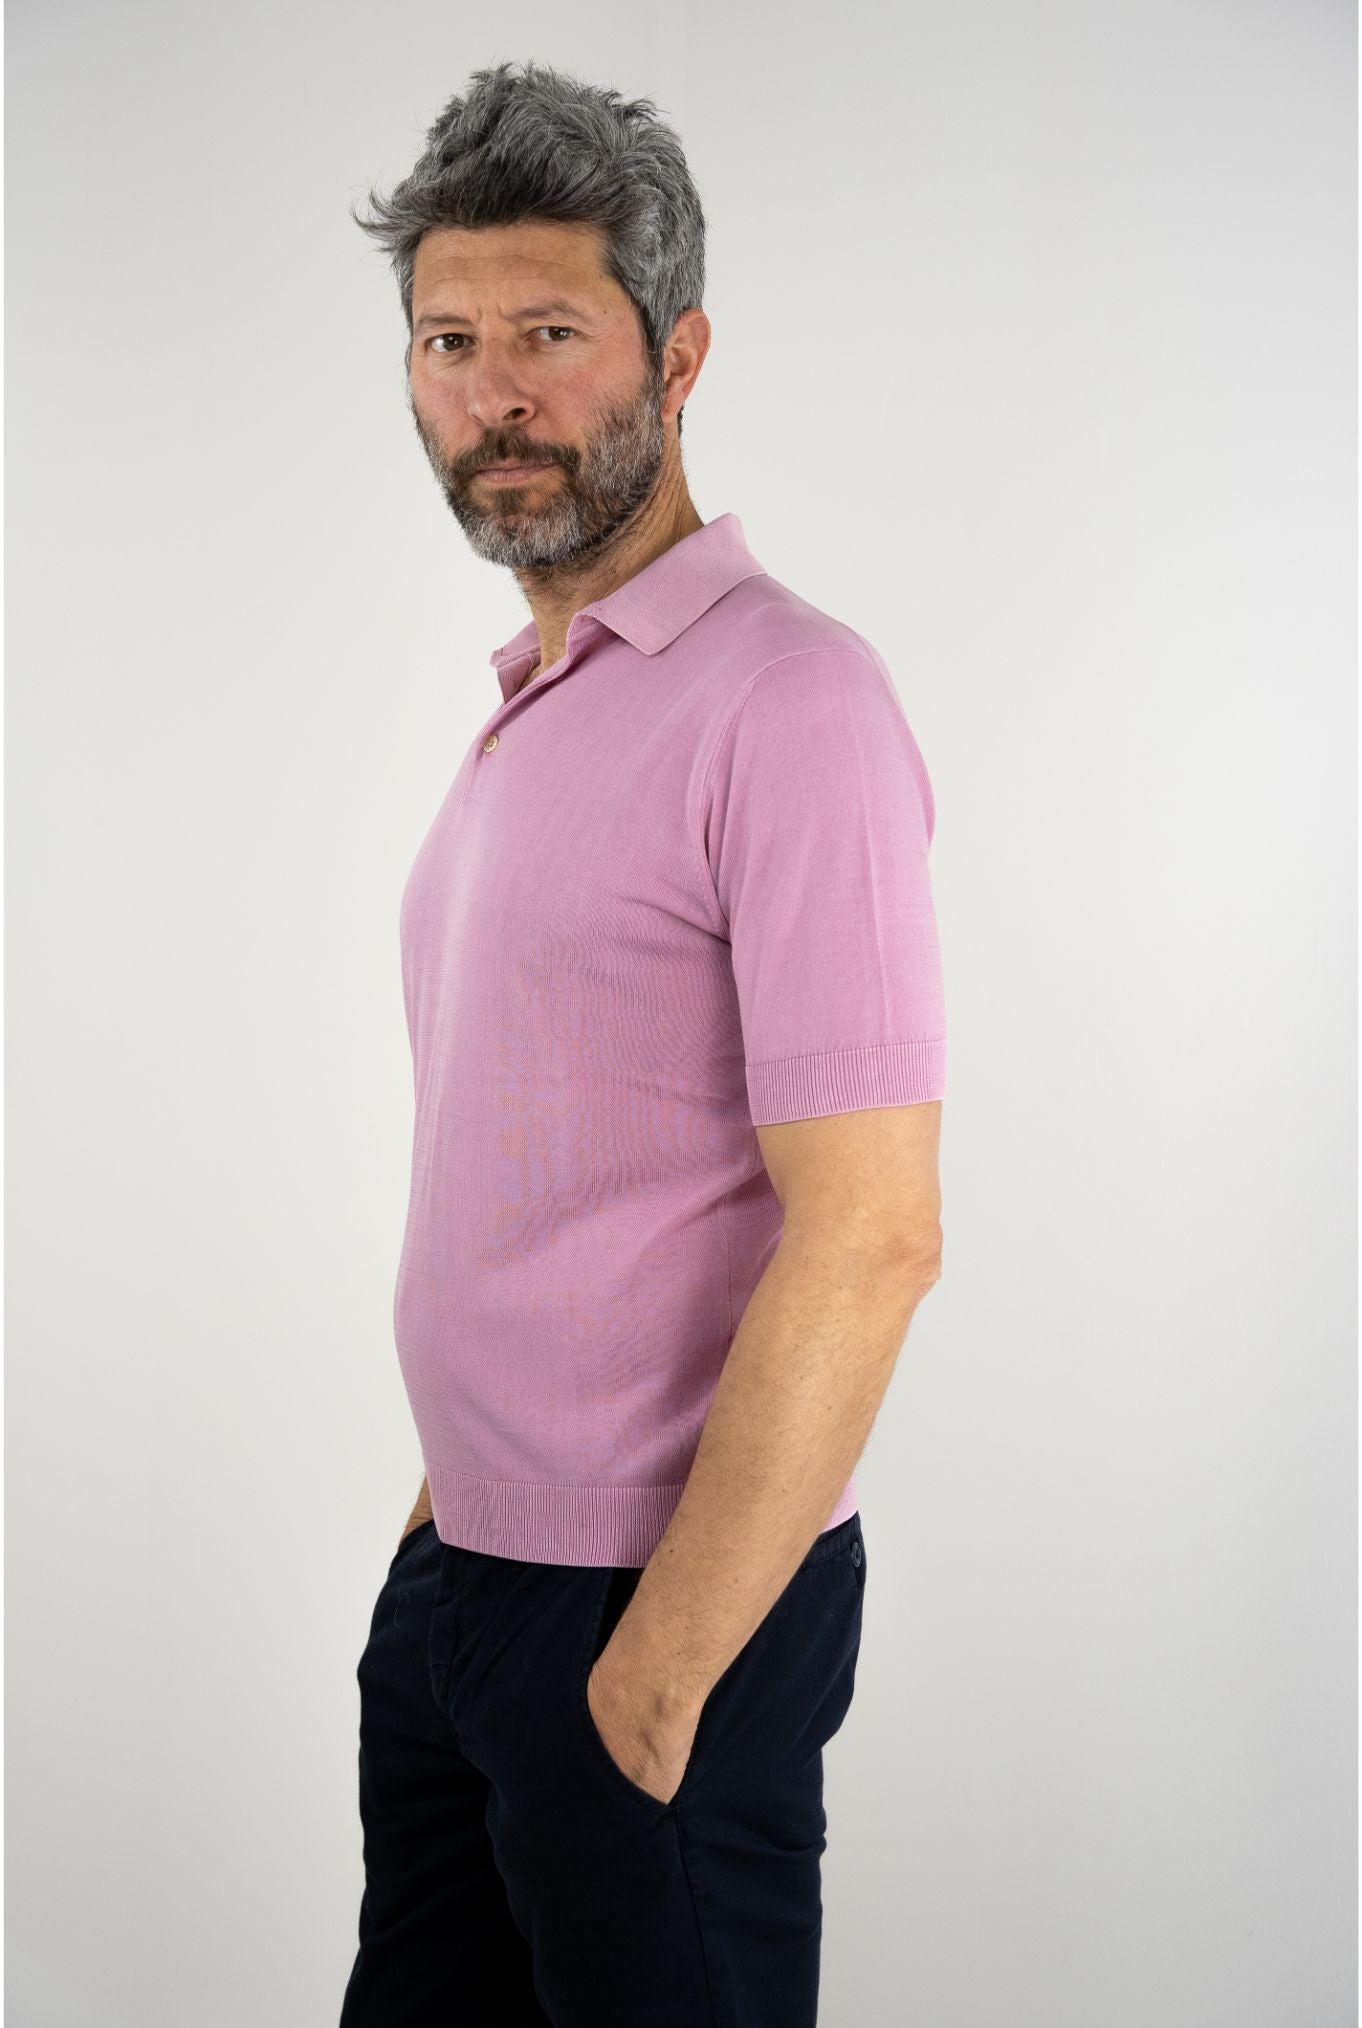 GUARINO Polo Short Sleeves Cotton Crêpe Antique Pink